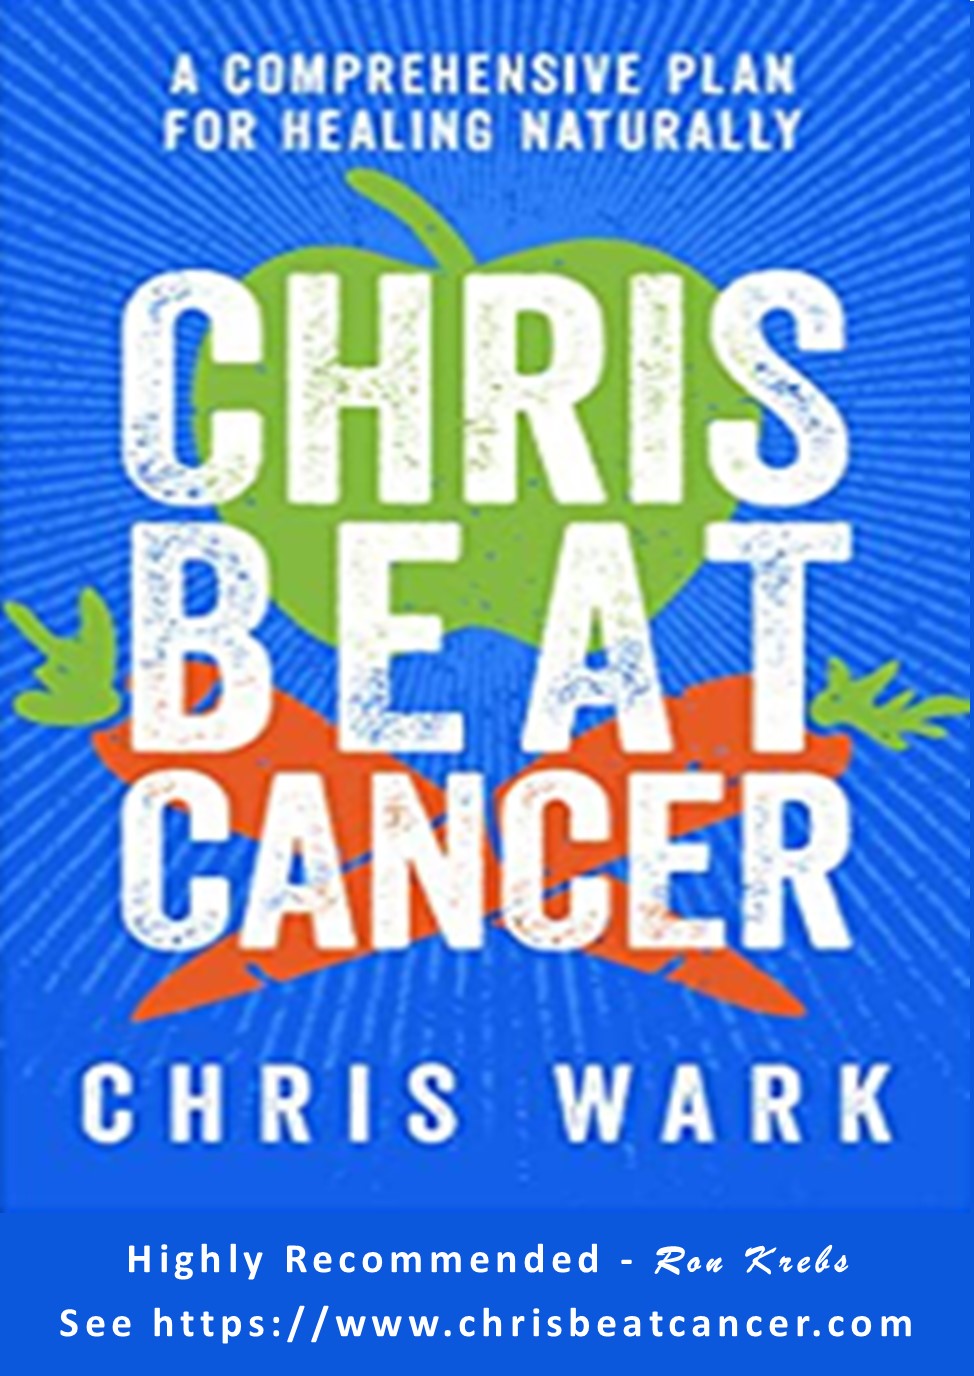 Chris Beats Cancer - Chris Wark